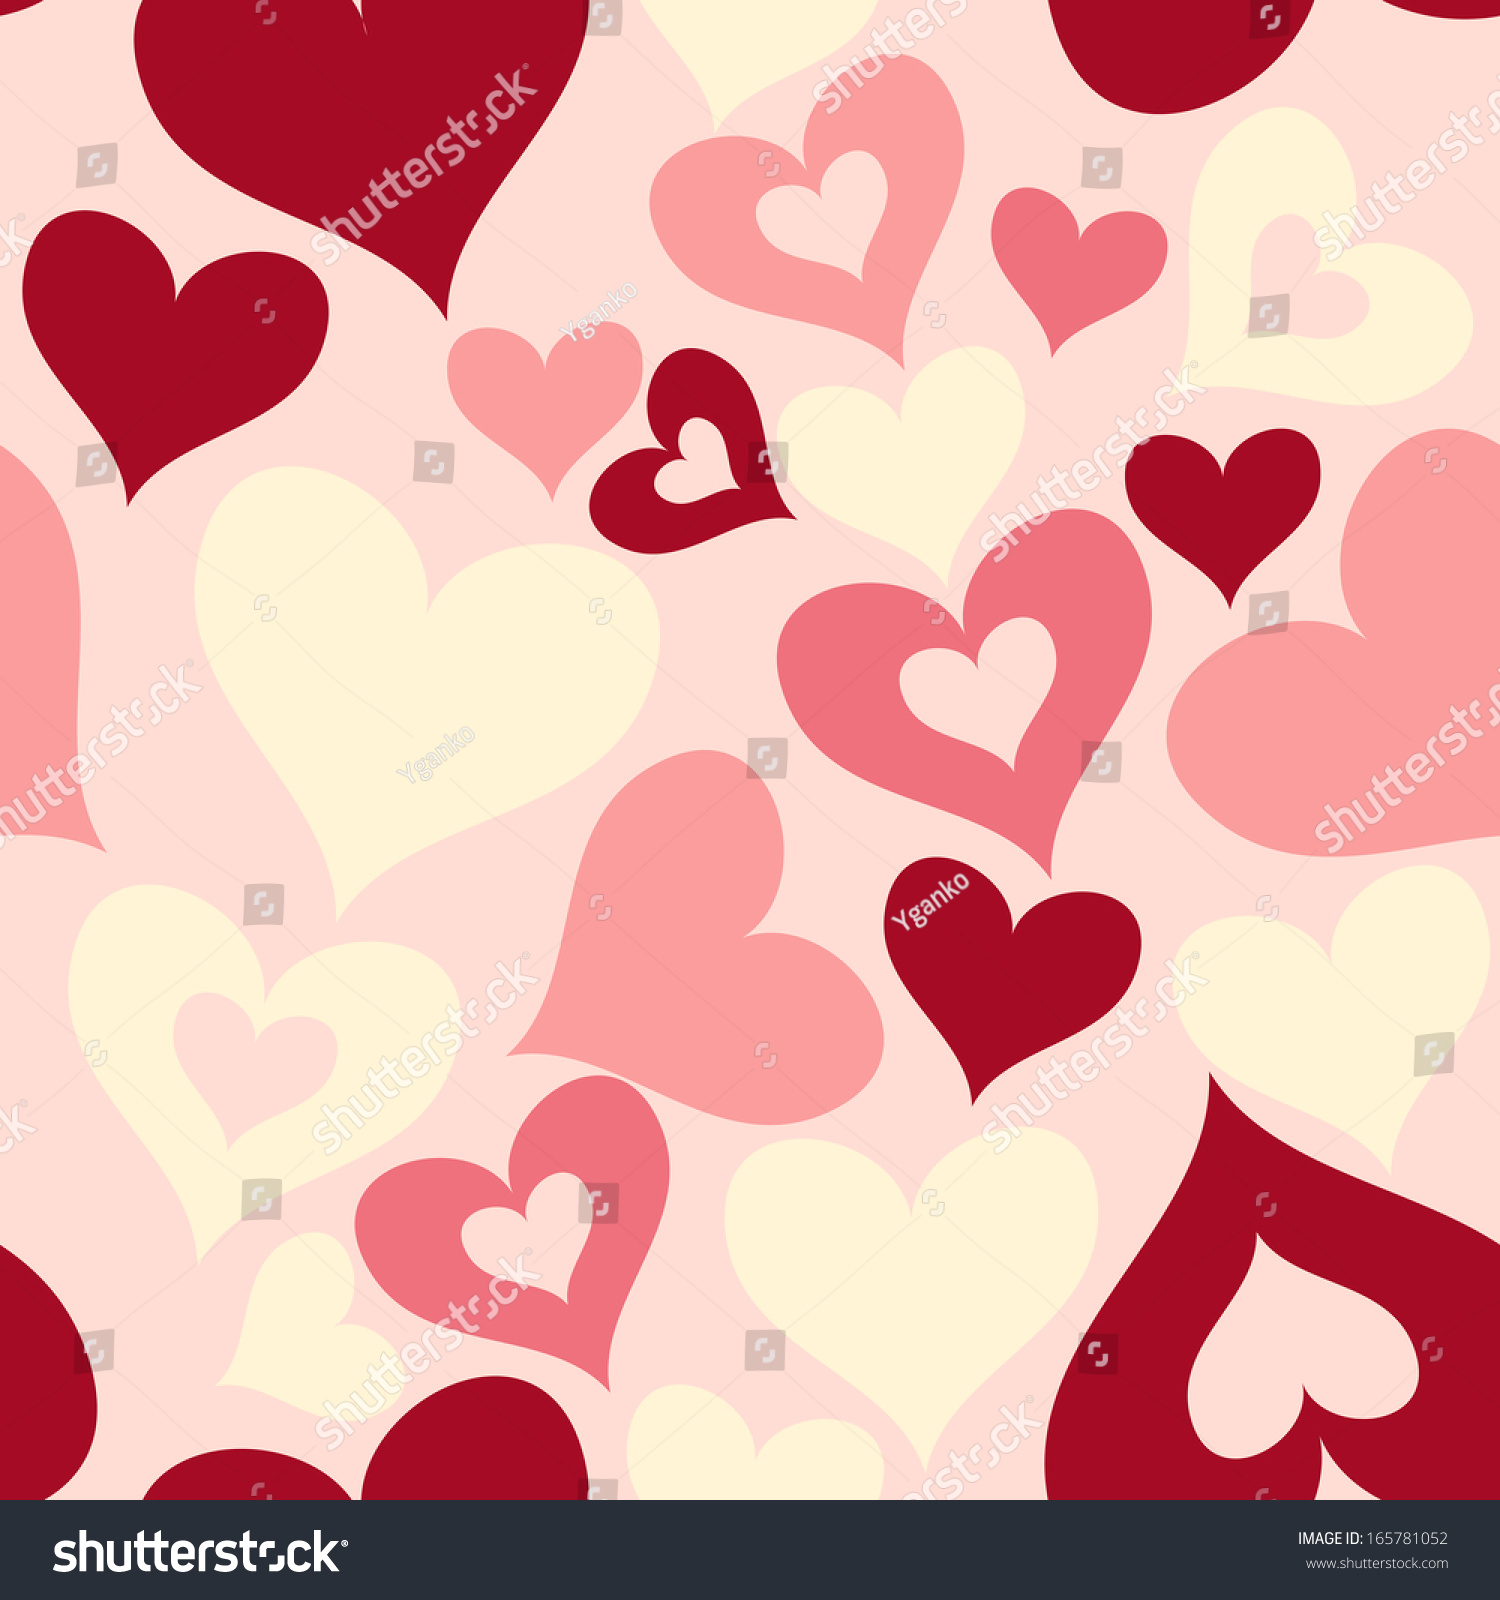 Valentine Seamless Hearts Pattern Stock Vector Illustration 165781052 Shutterstock 8583